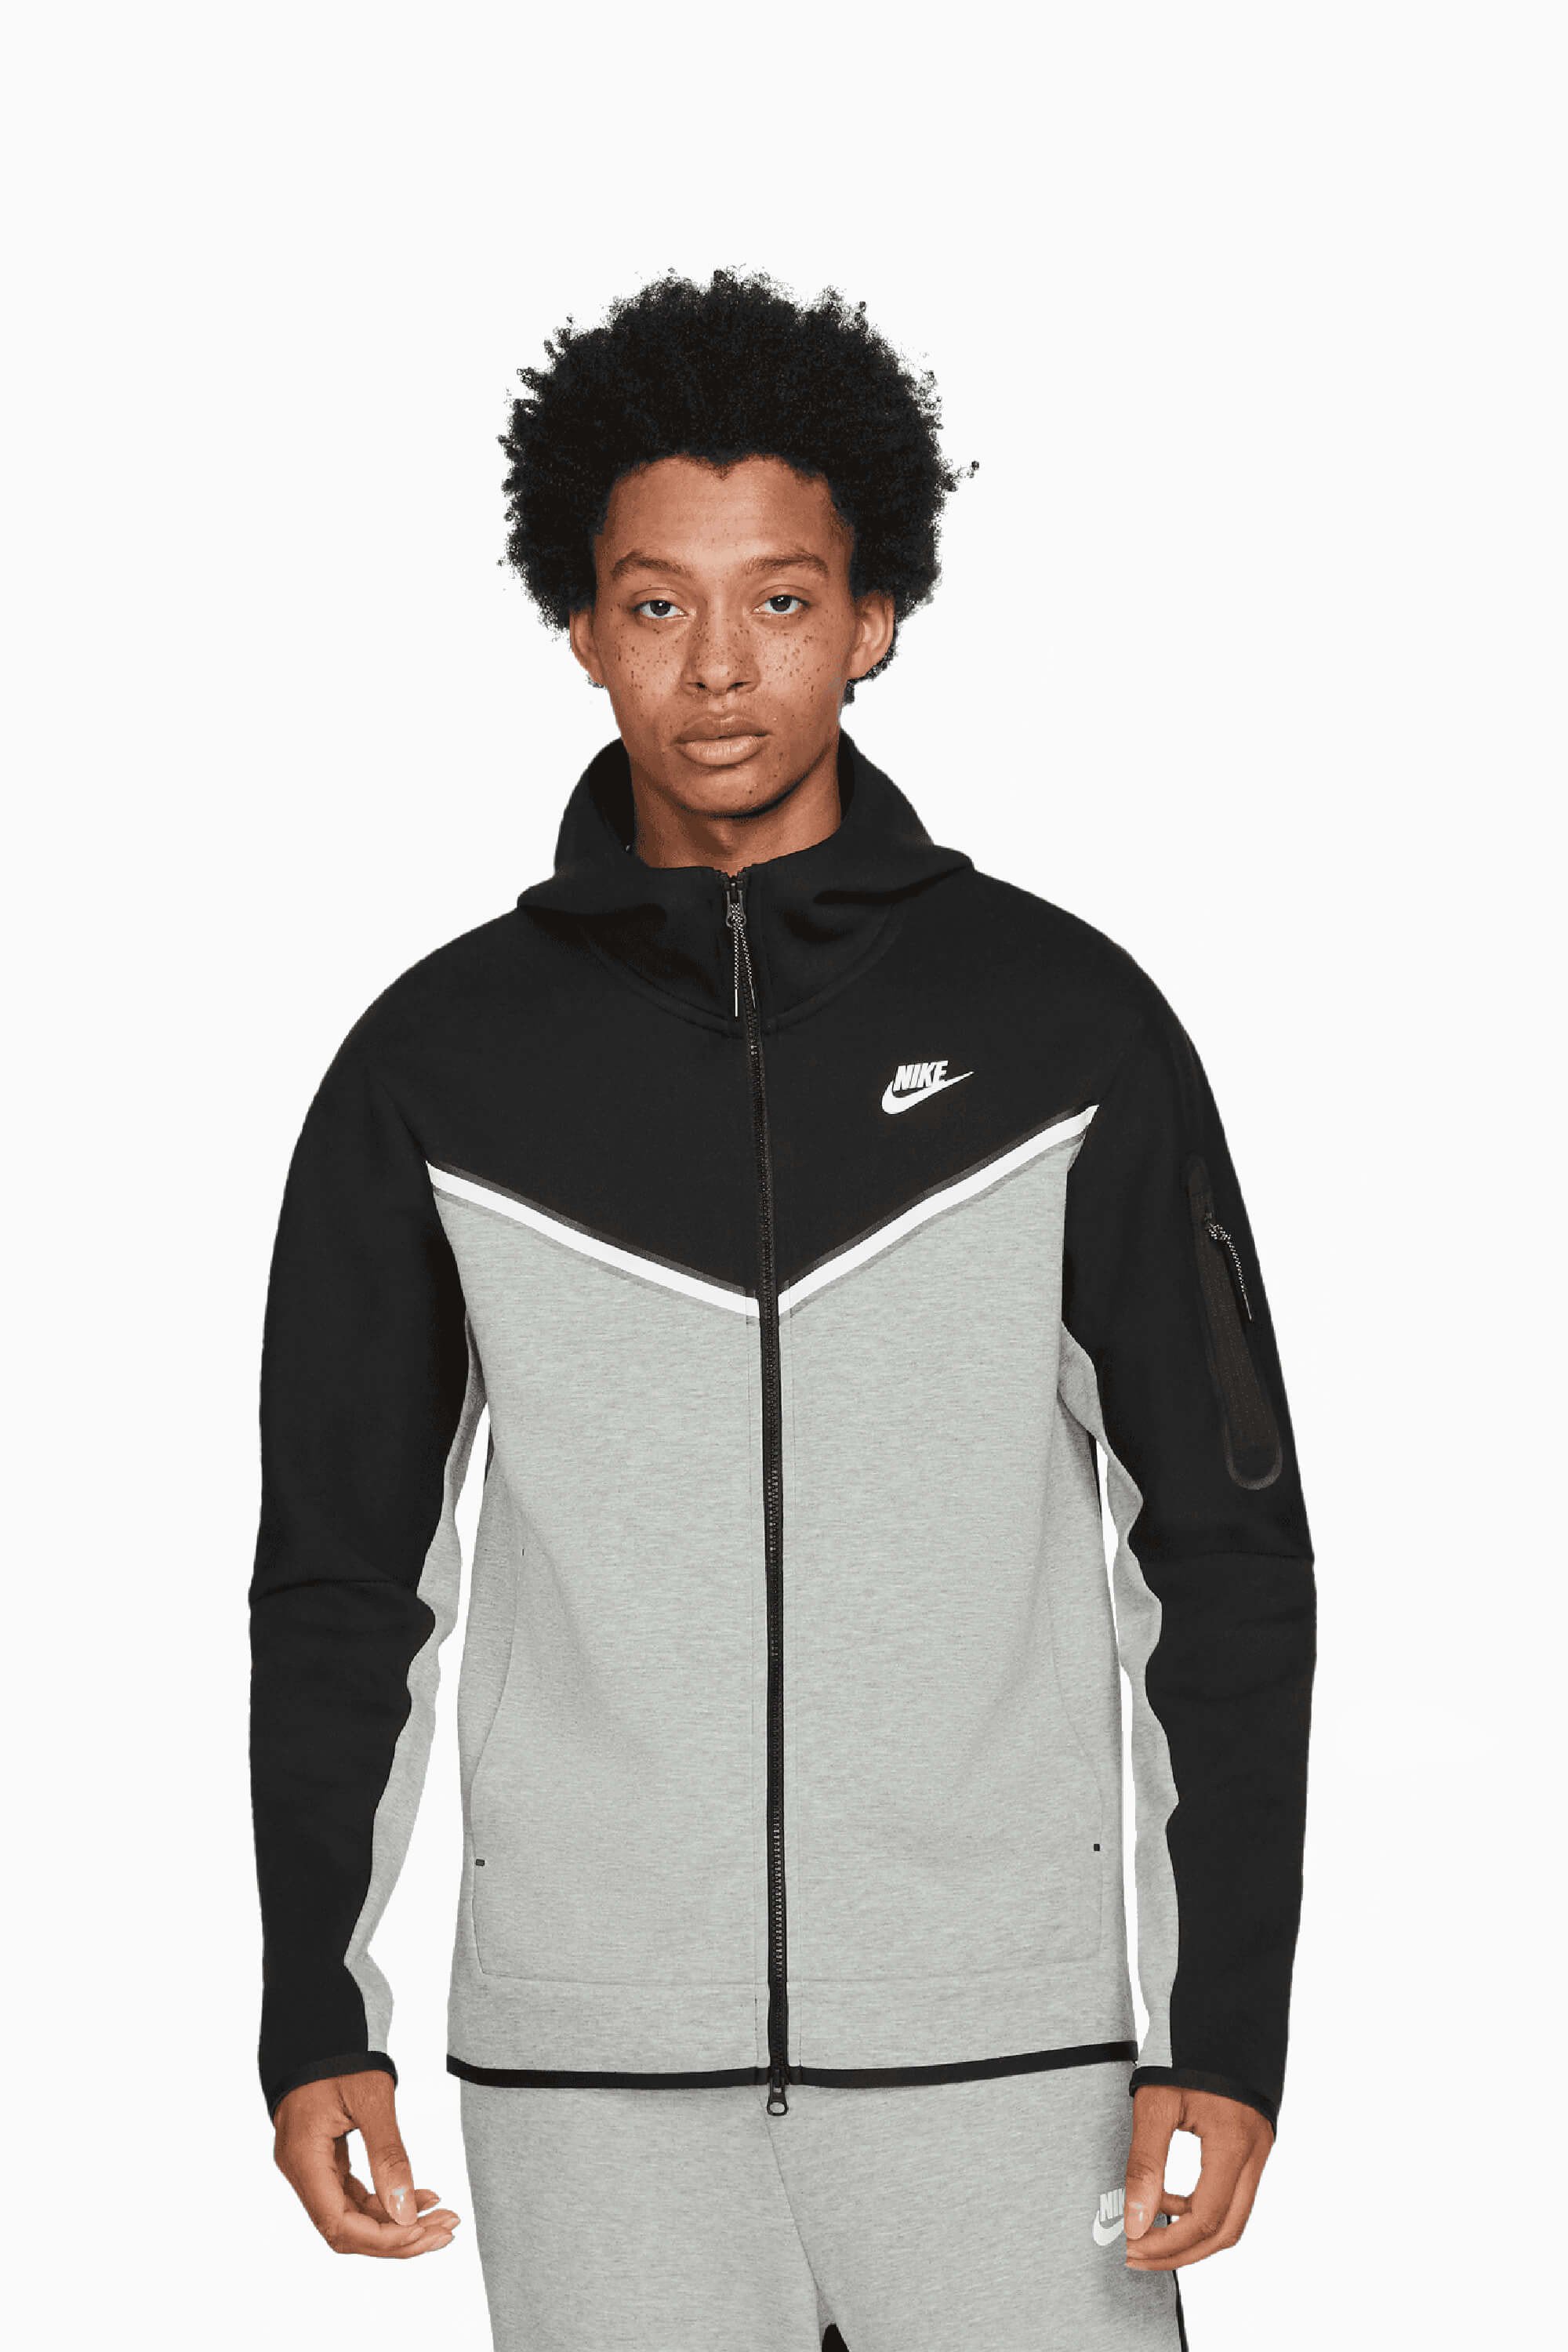 Nike Tech Fleece Hoodie Men (Small, Black/Dark Grey Heather/White